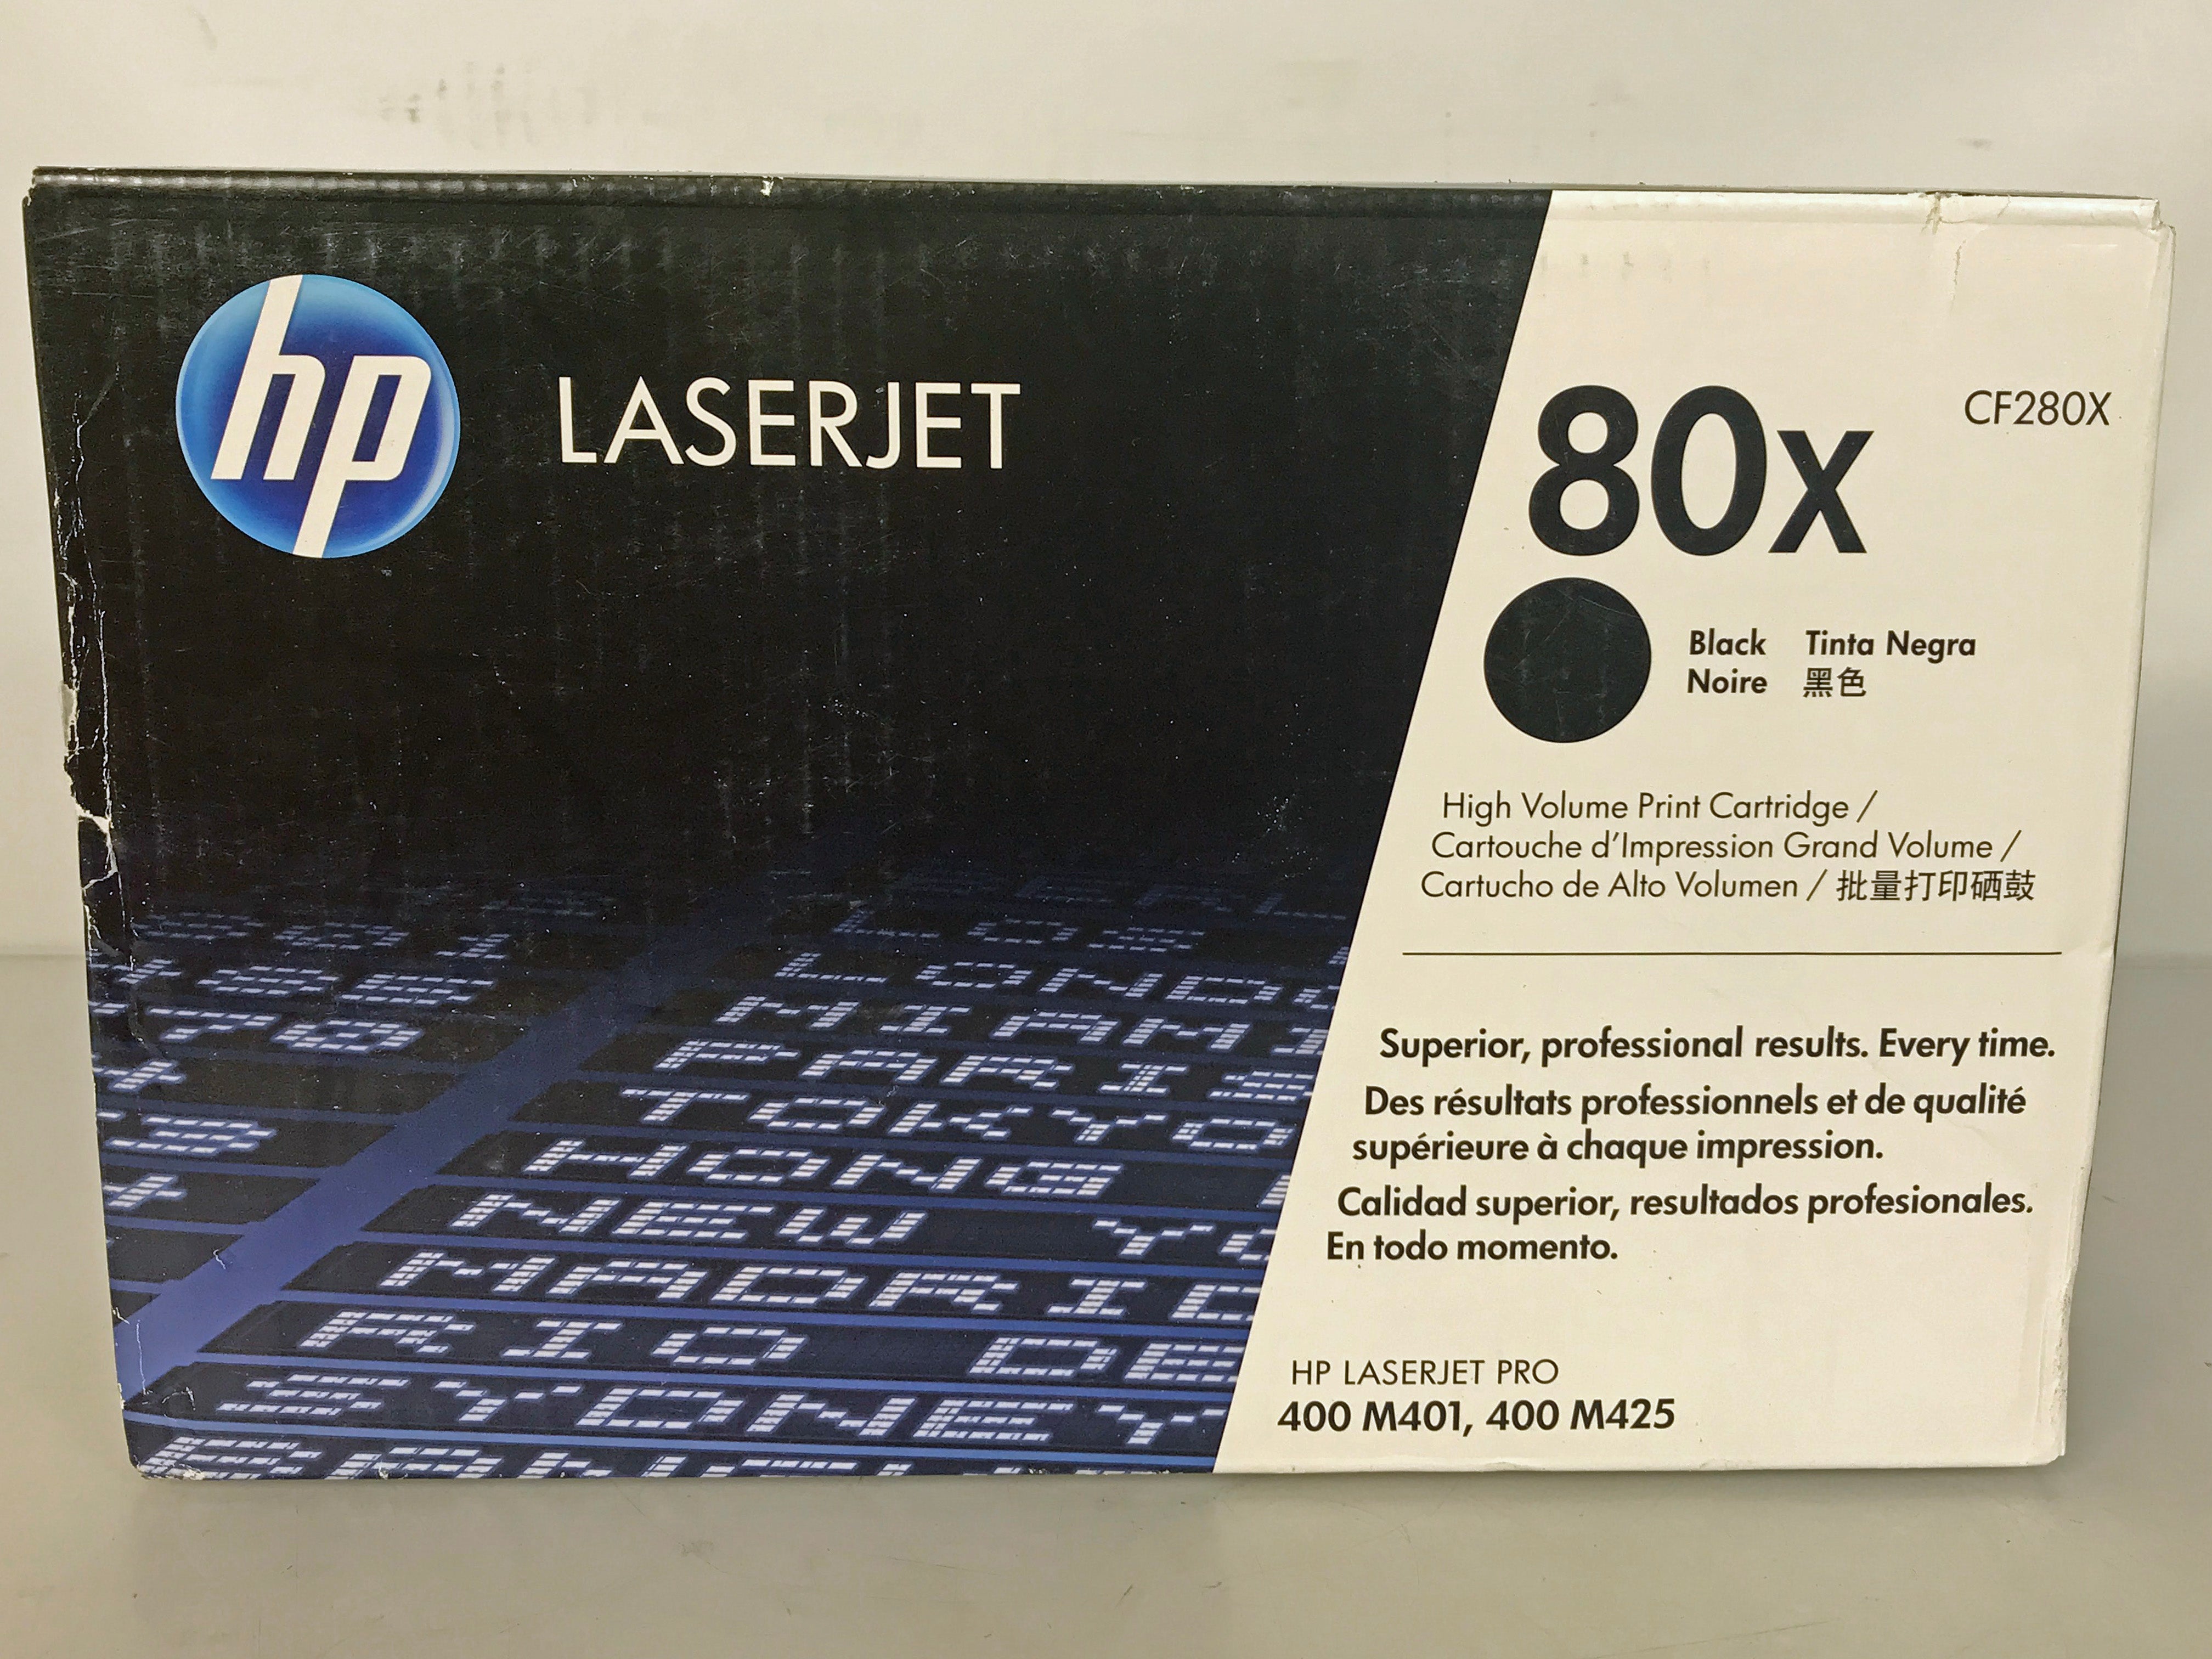 HP Laserjet 80X CF280X Black Toner Cartridge